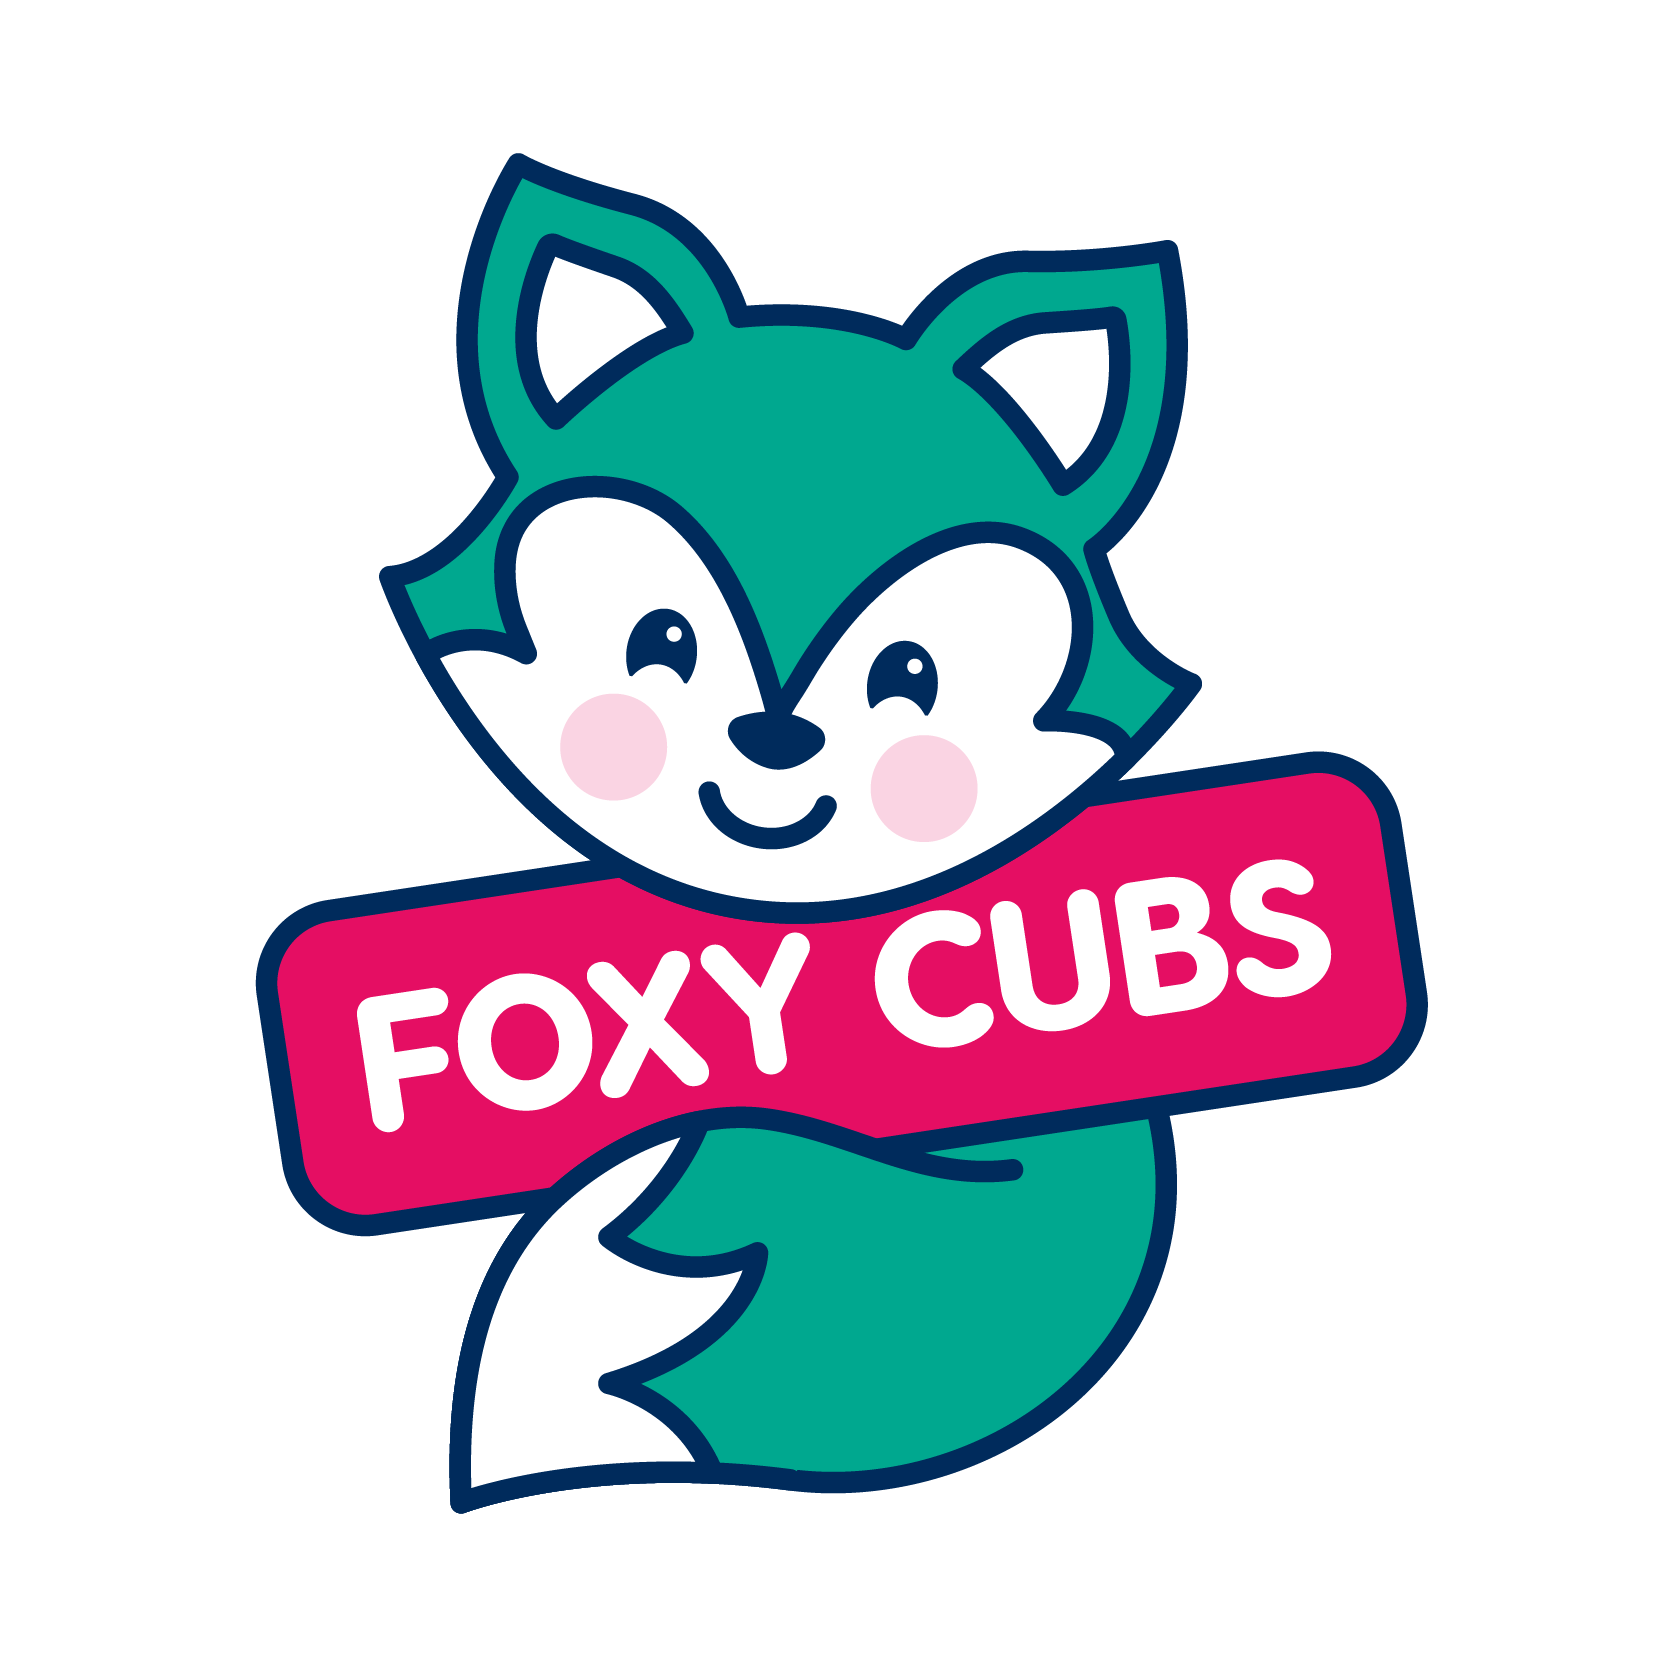 Foxy Cubs